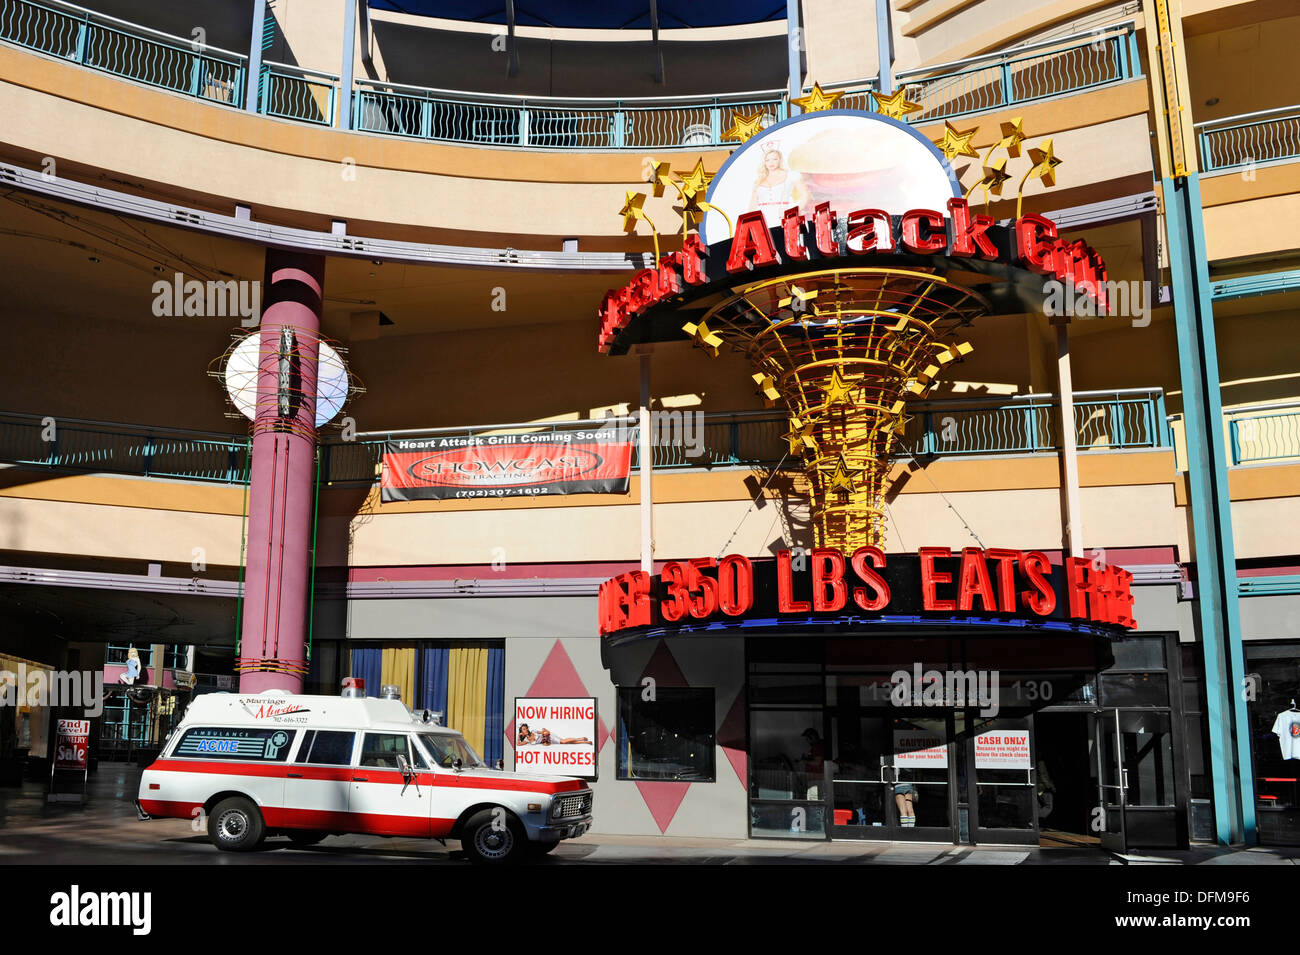 Heart Attack Grill Las Vegas Nevada Restaurant Stock Photo - Alamy